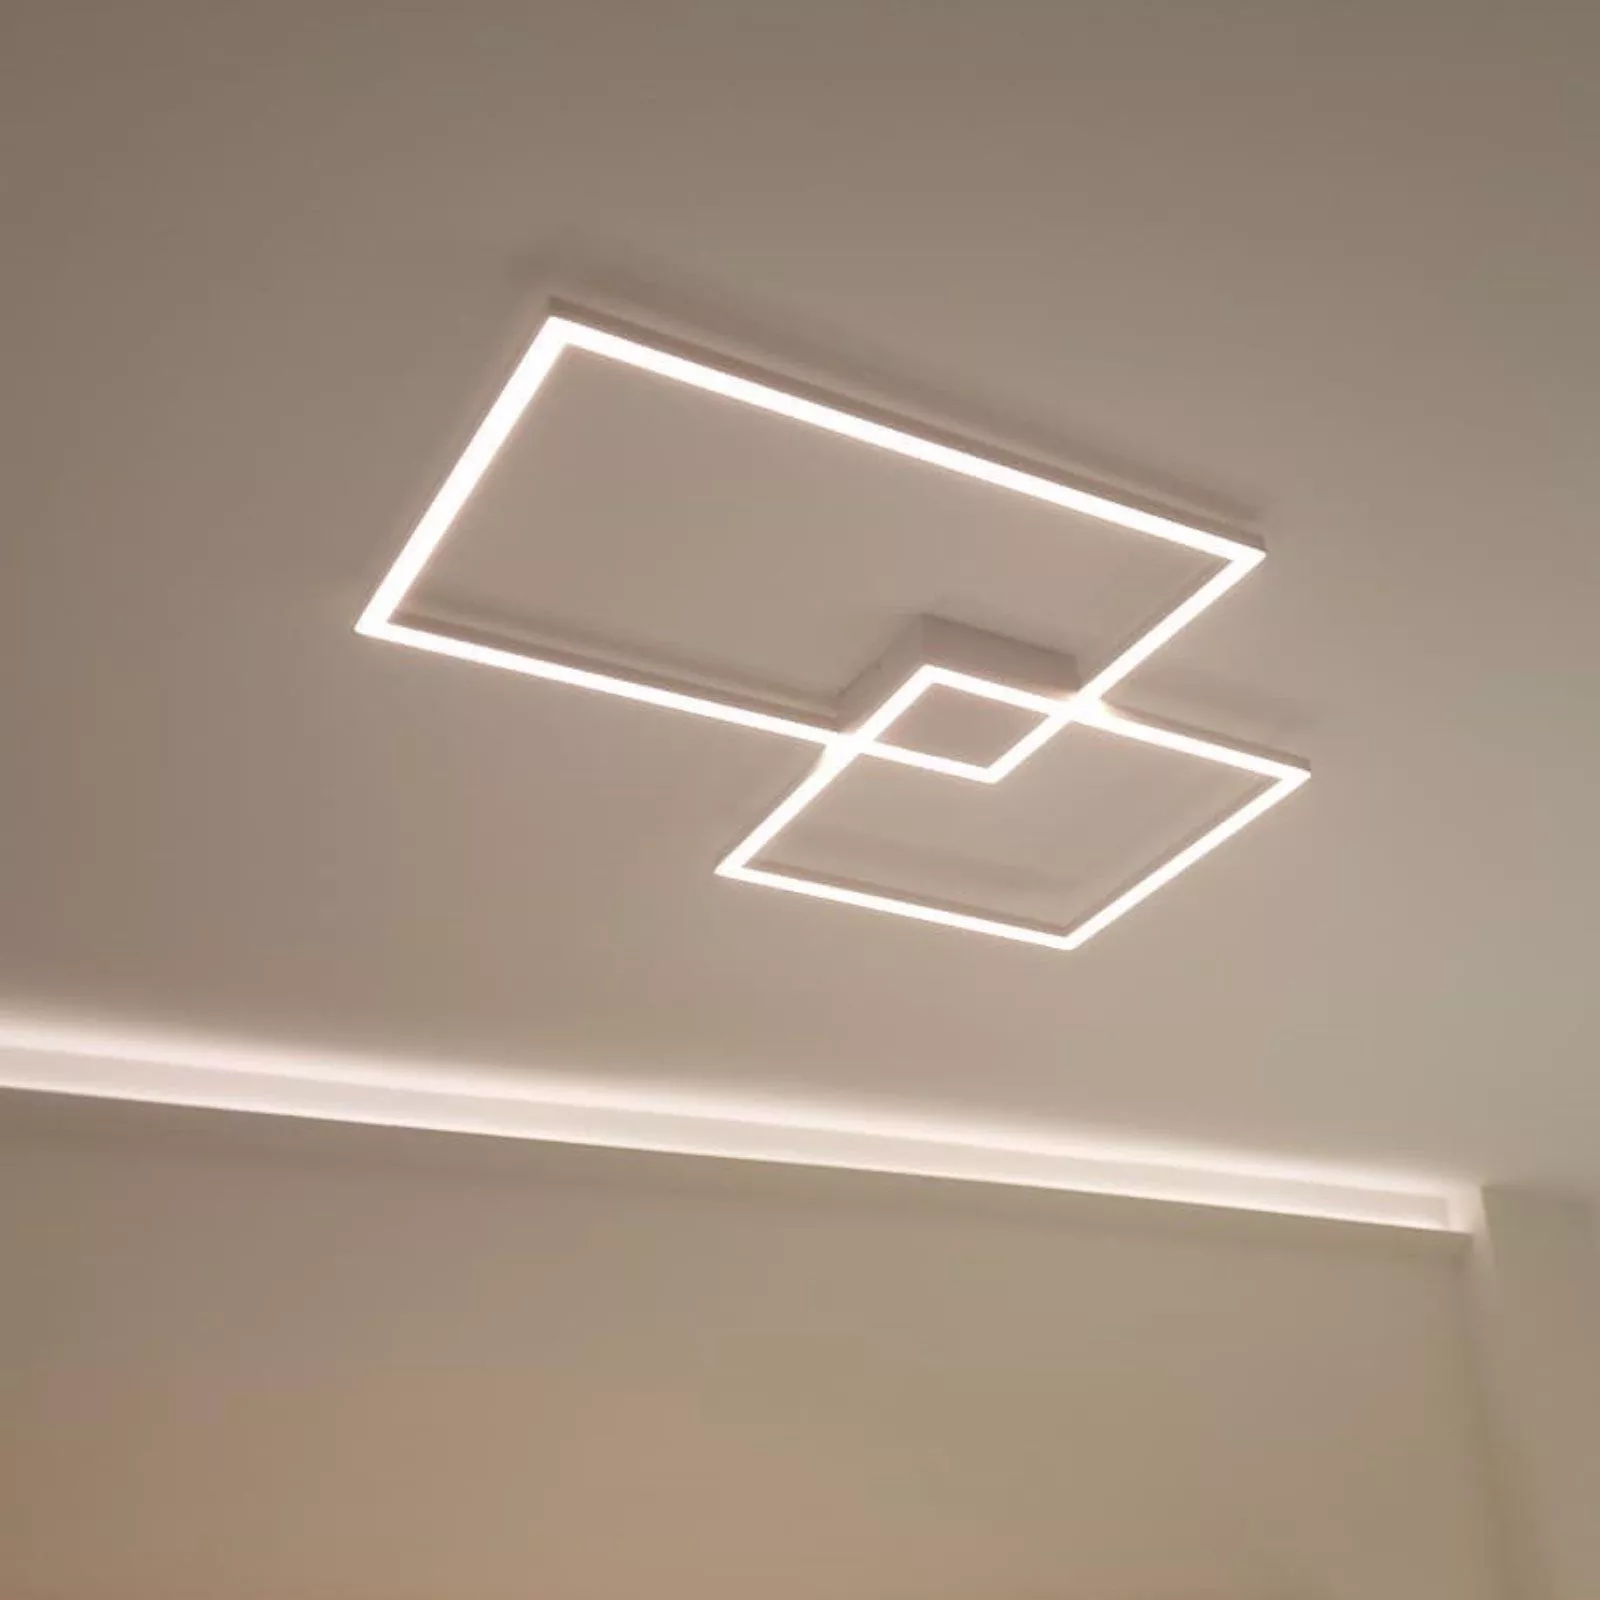 CROSS Plafoniera a LED Design Moderno